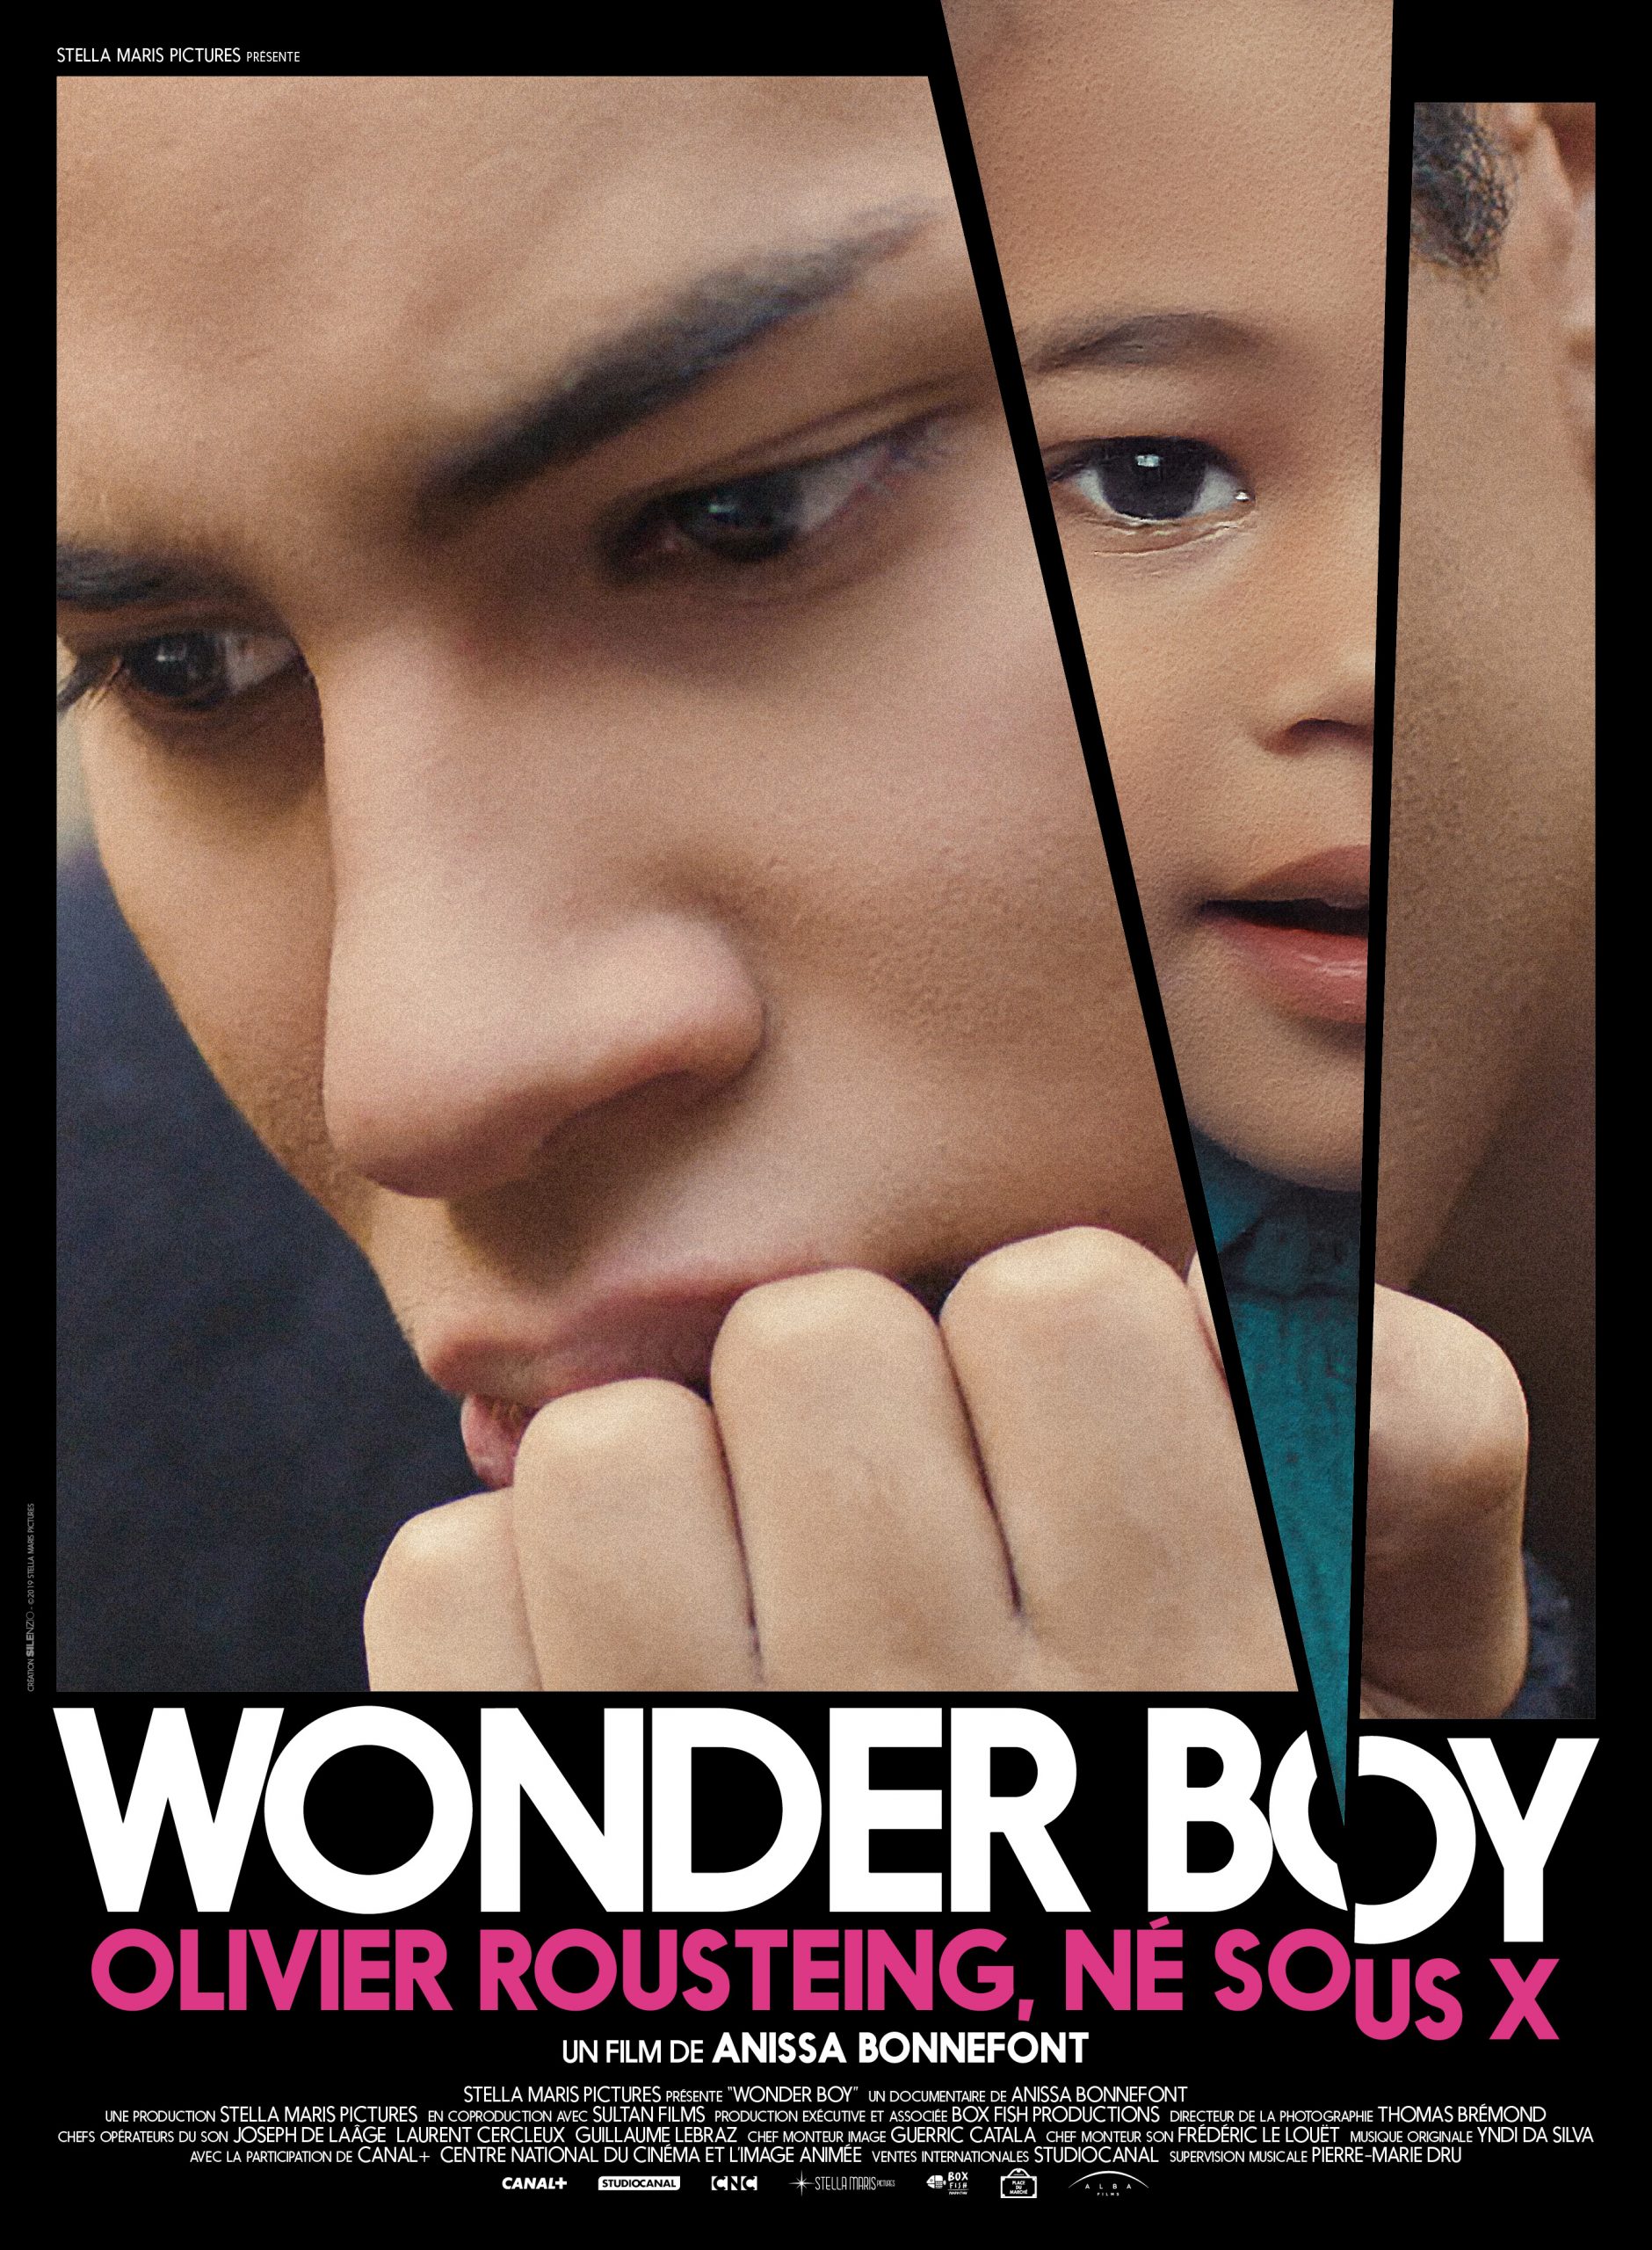 Wonder Boy: Olivier Rousteing-Seyret